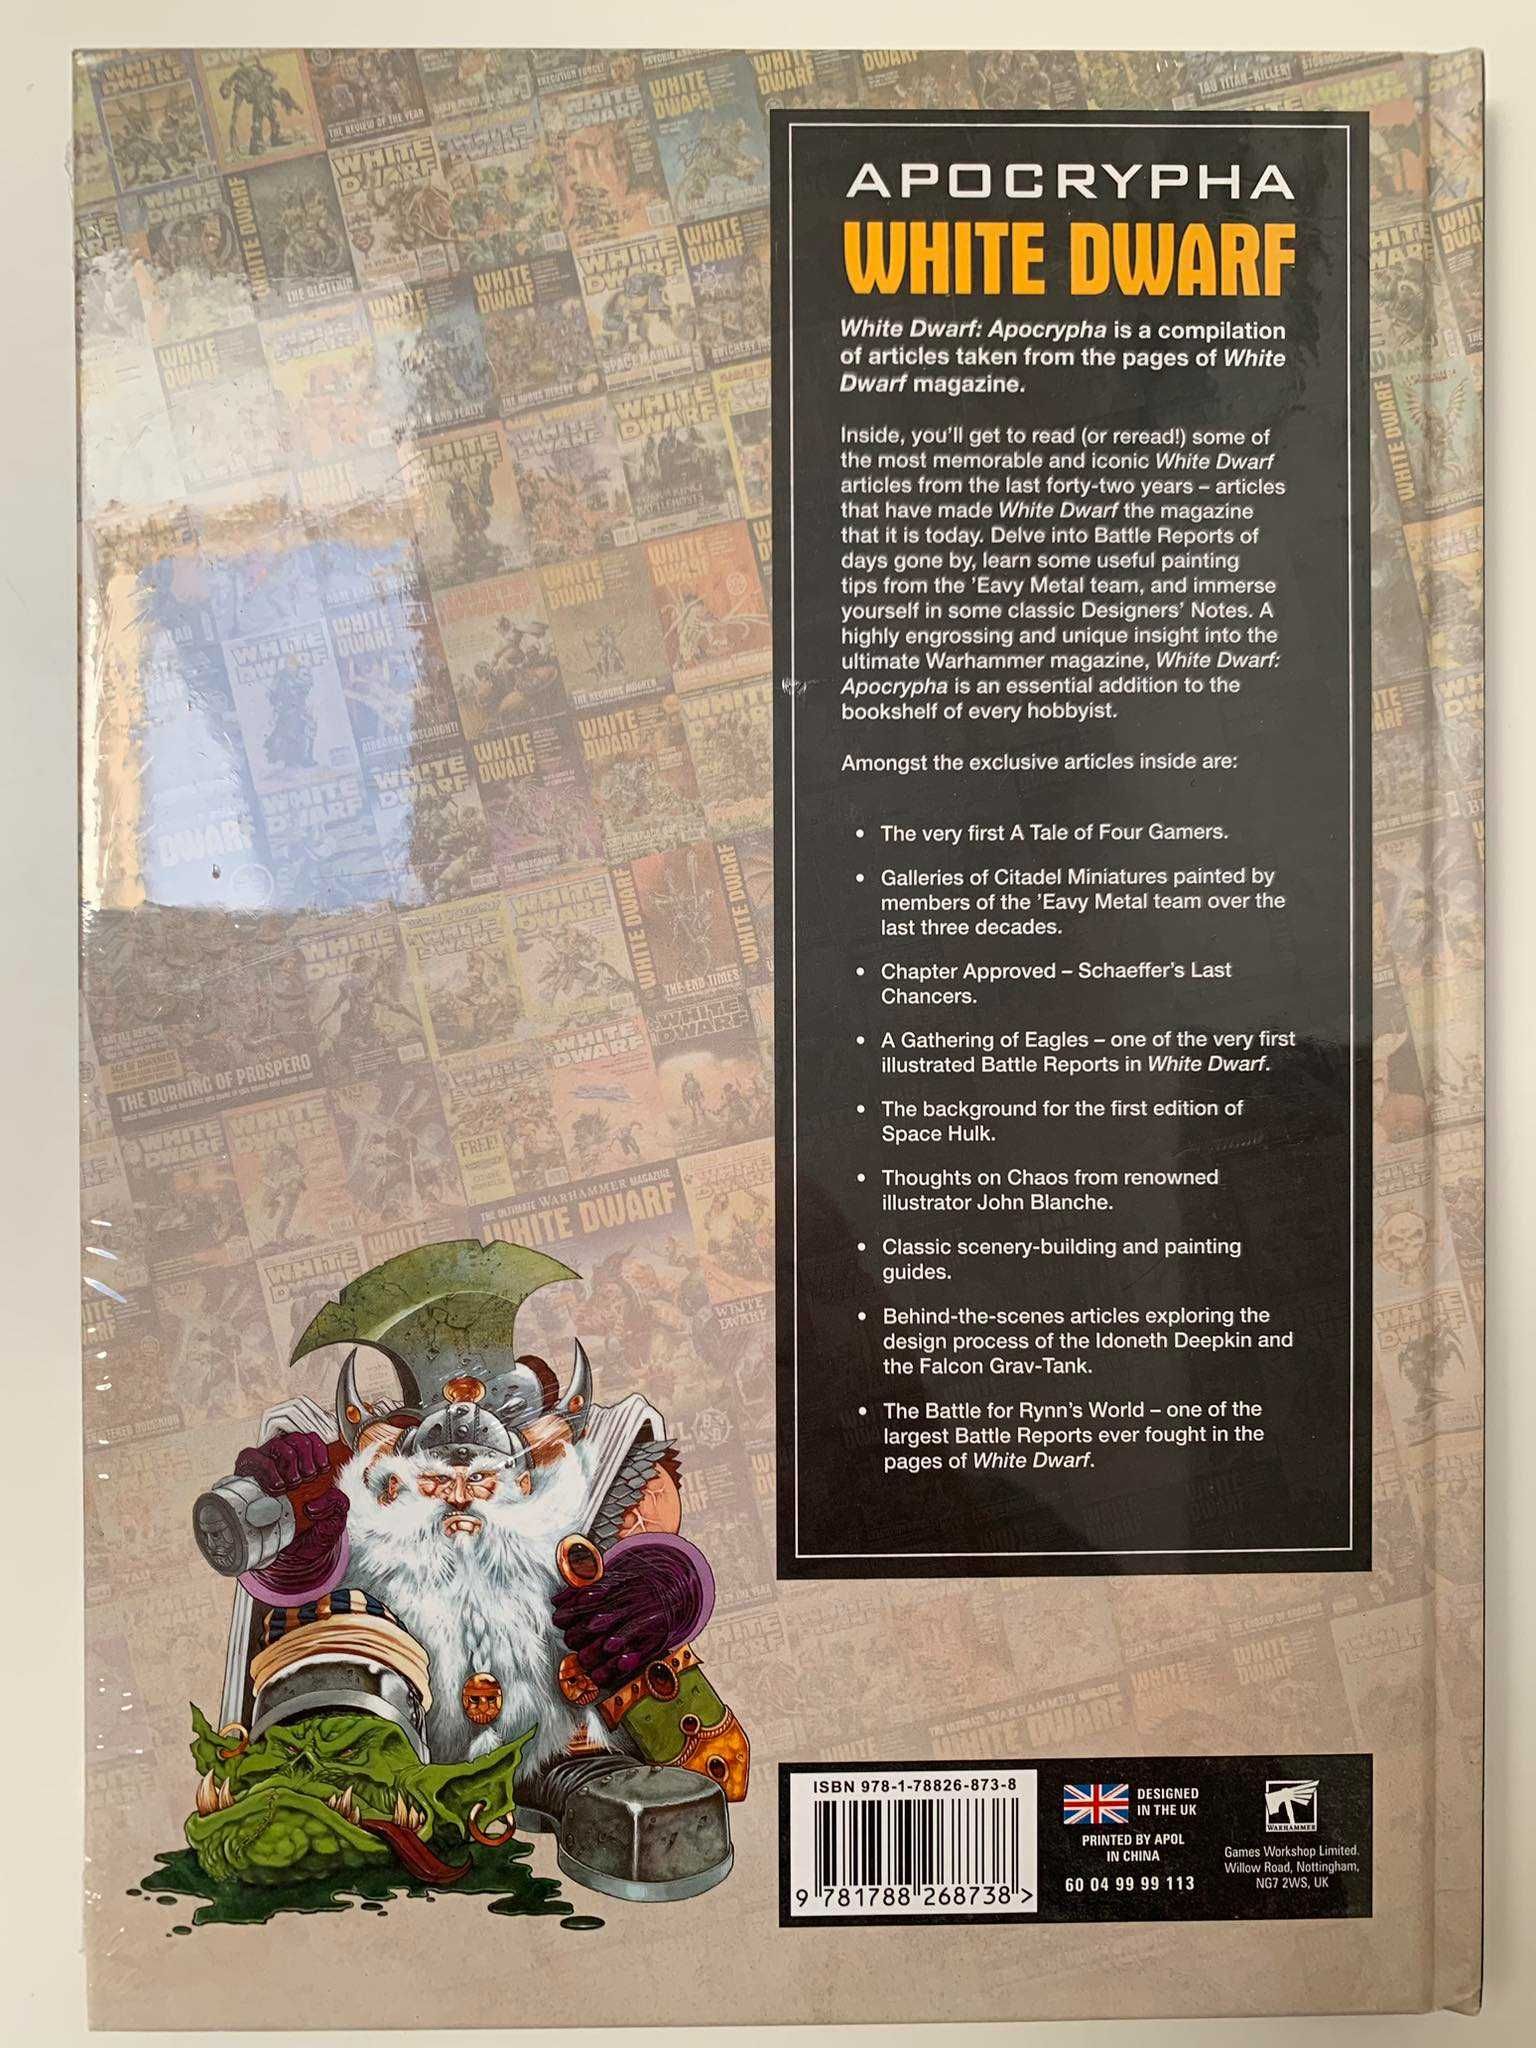 White Dwarf: Apocrypha - folia, oldhammer, Warhammer, Space Hulk, etc.